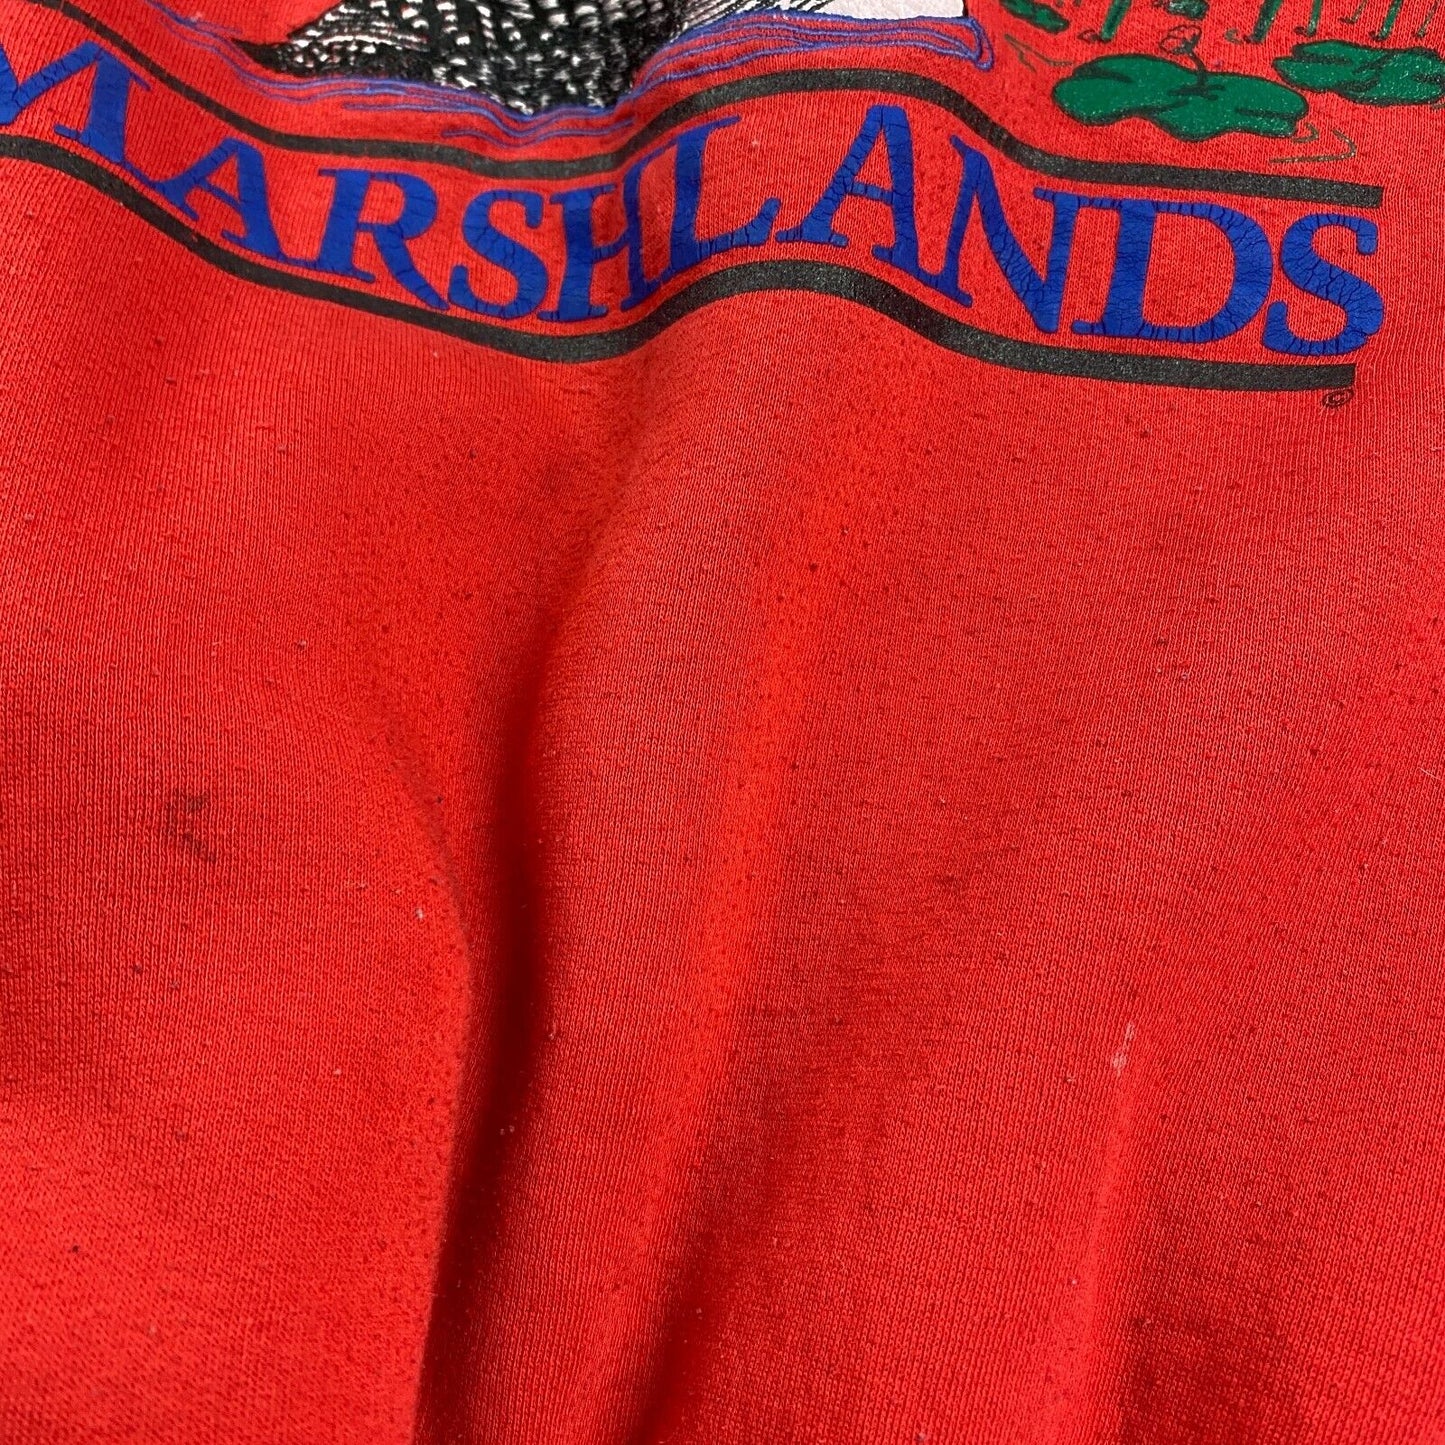 VINTAGE 90s Canadian Marshlands Red Crewneck Sweater sz X-Large Womens